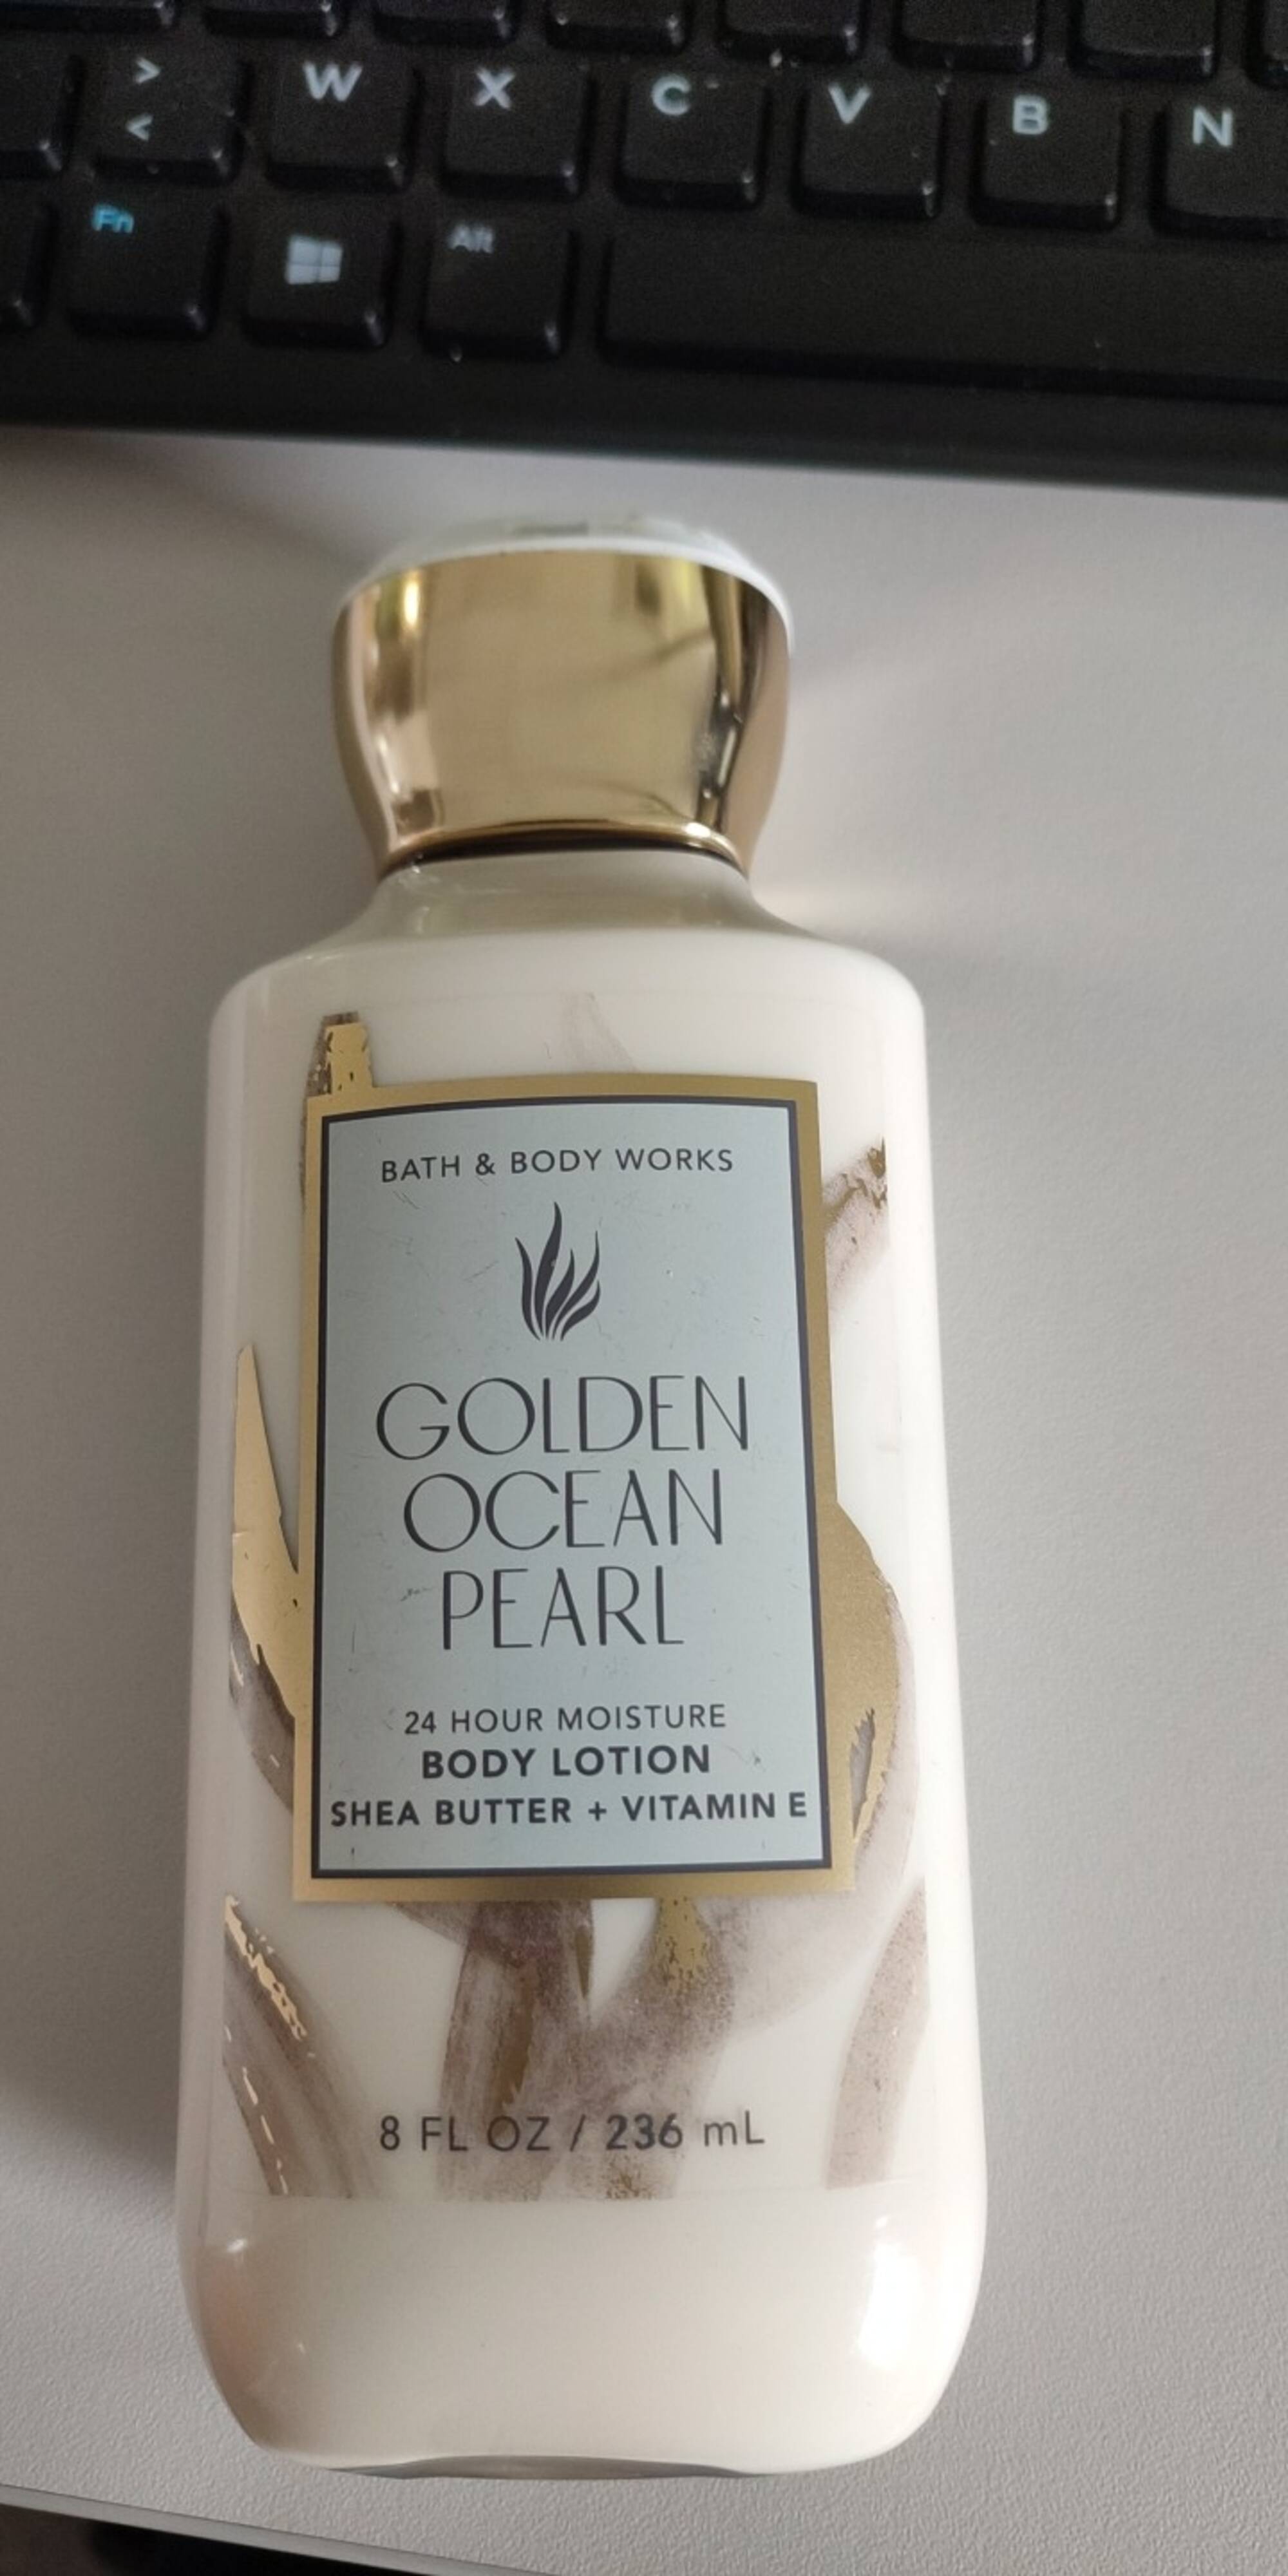 BATH & BODY WORKS - Golden ocean pearl - Body lotion